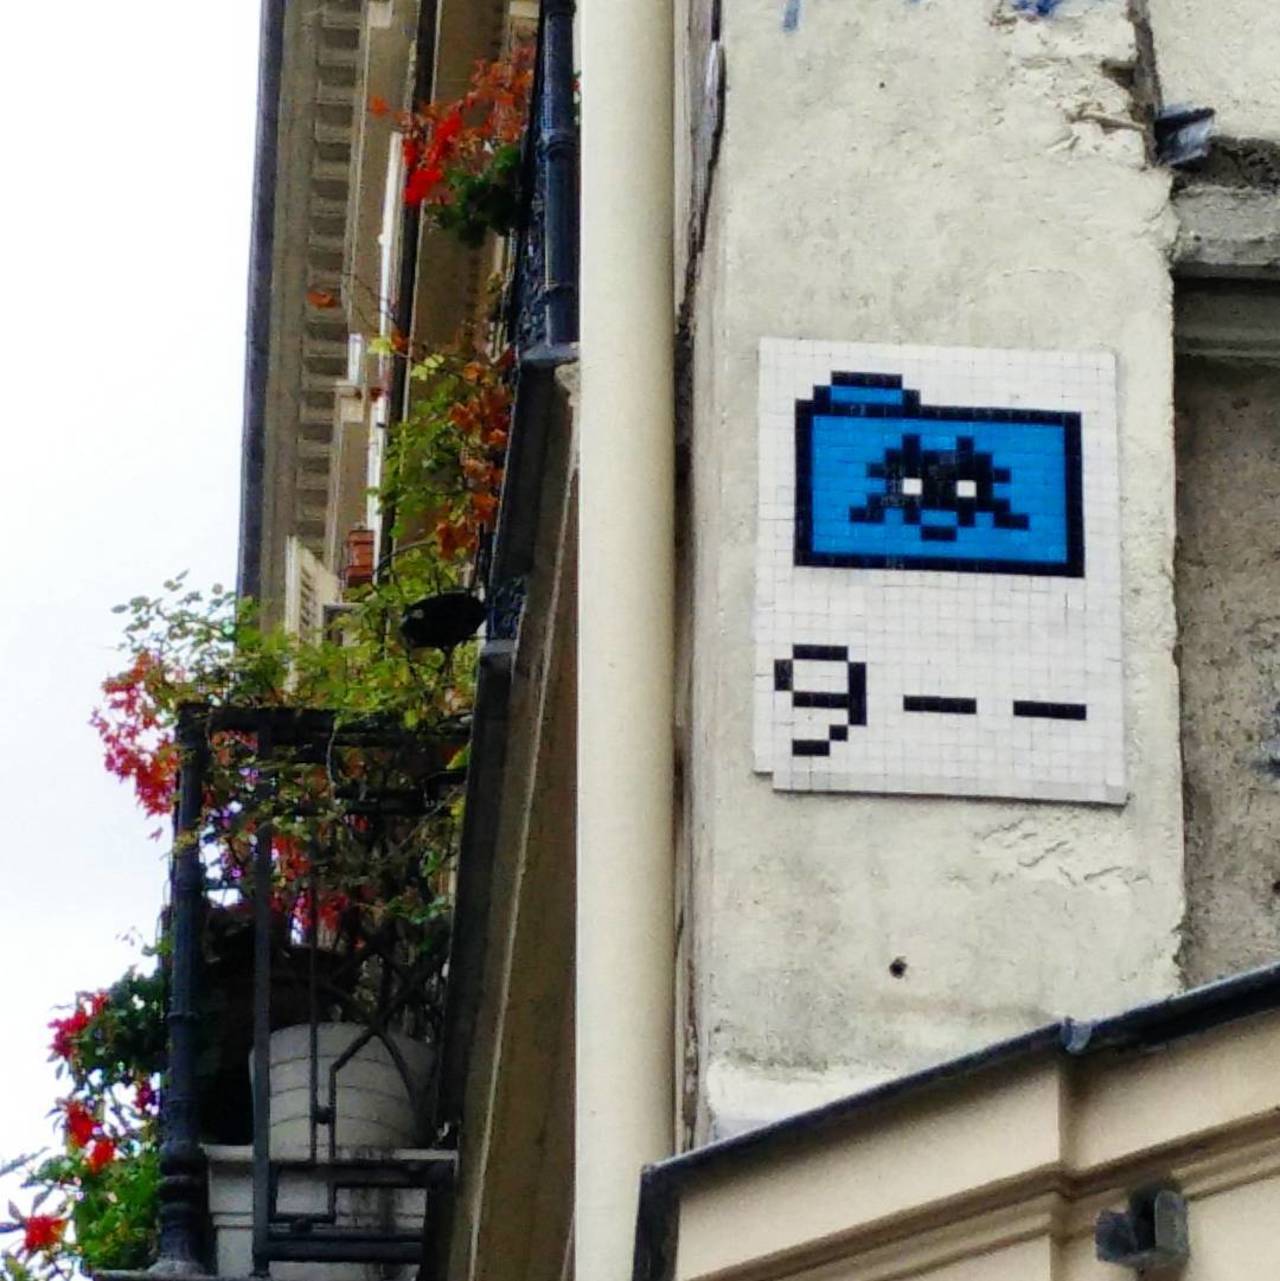 #Paris #graffiti photo by @ceky_art http://ift.tt/1LXMuFT #StreetArt https://t.co/RGTsBySOGN